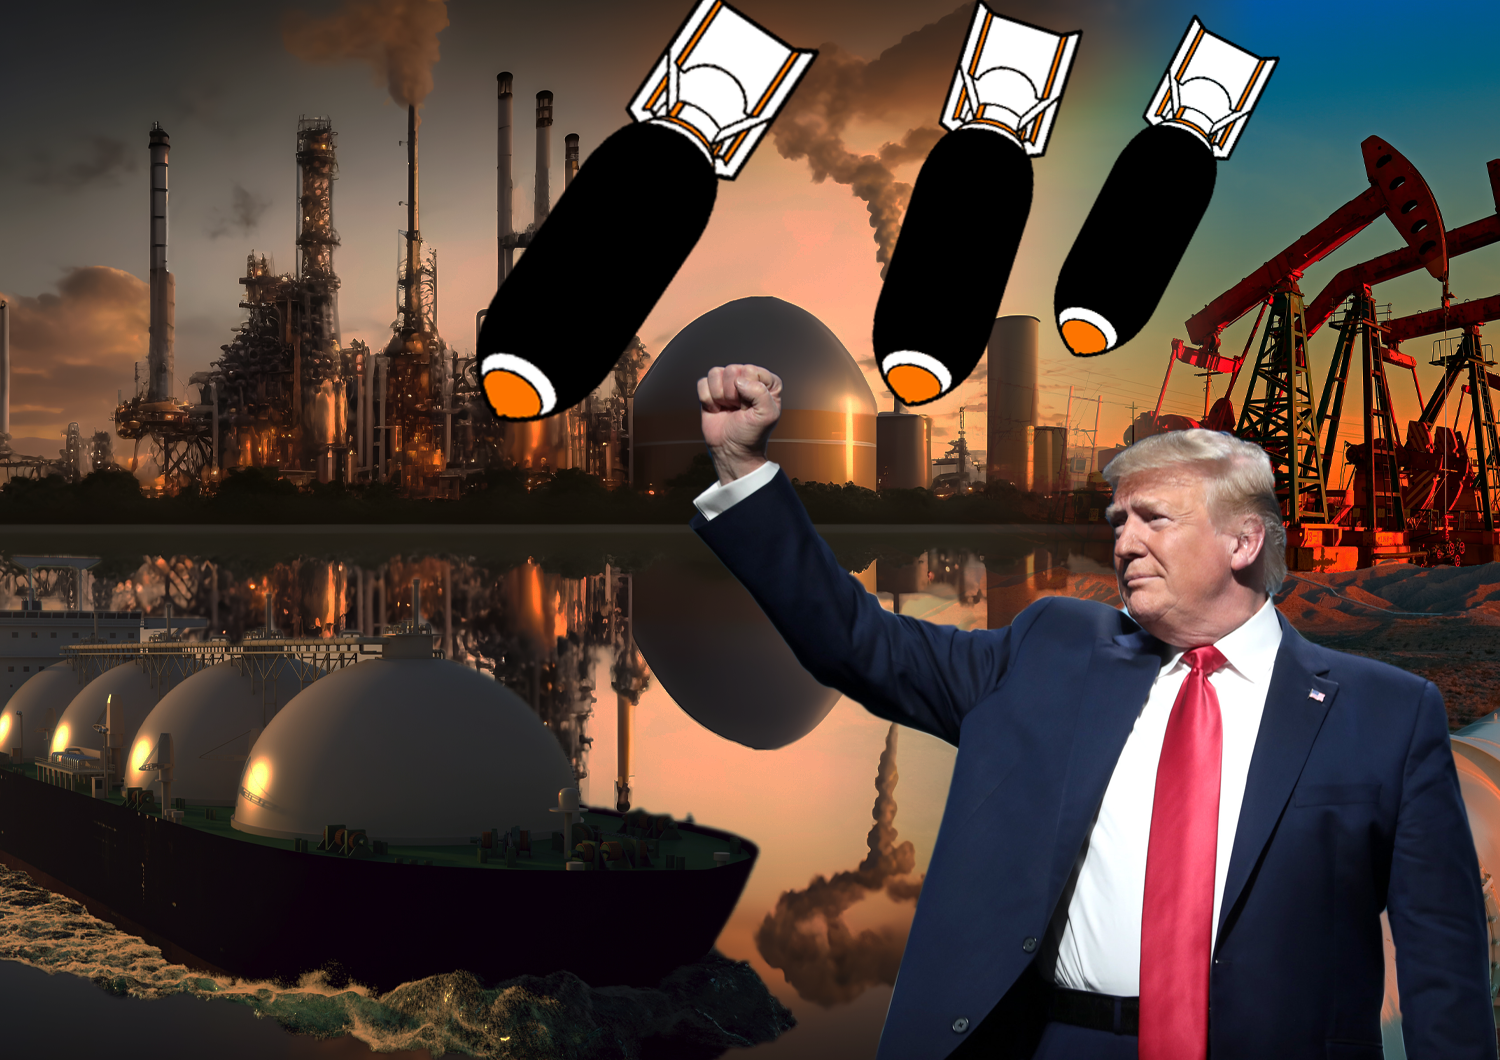 Trump wants war and warming